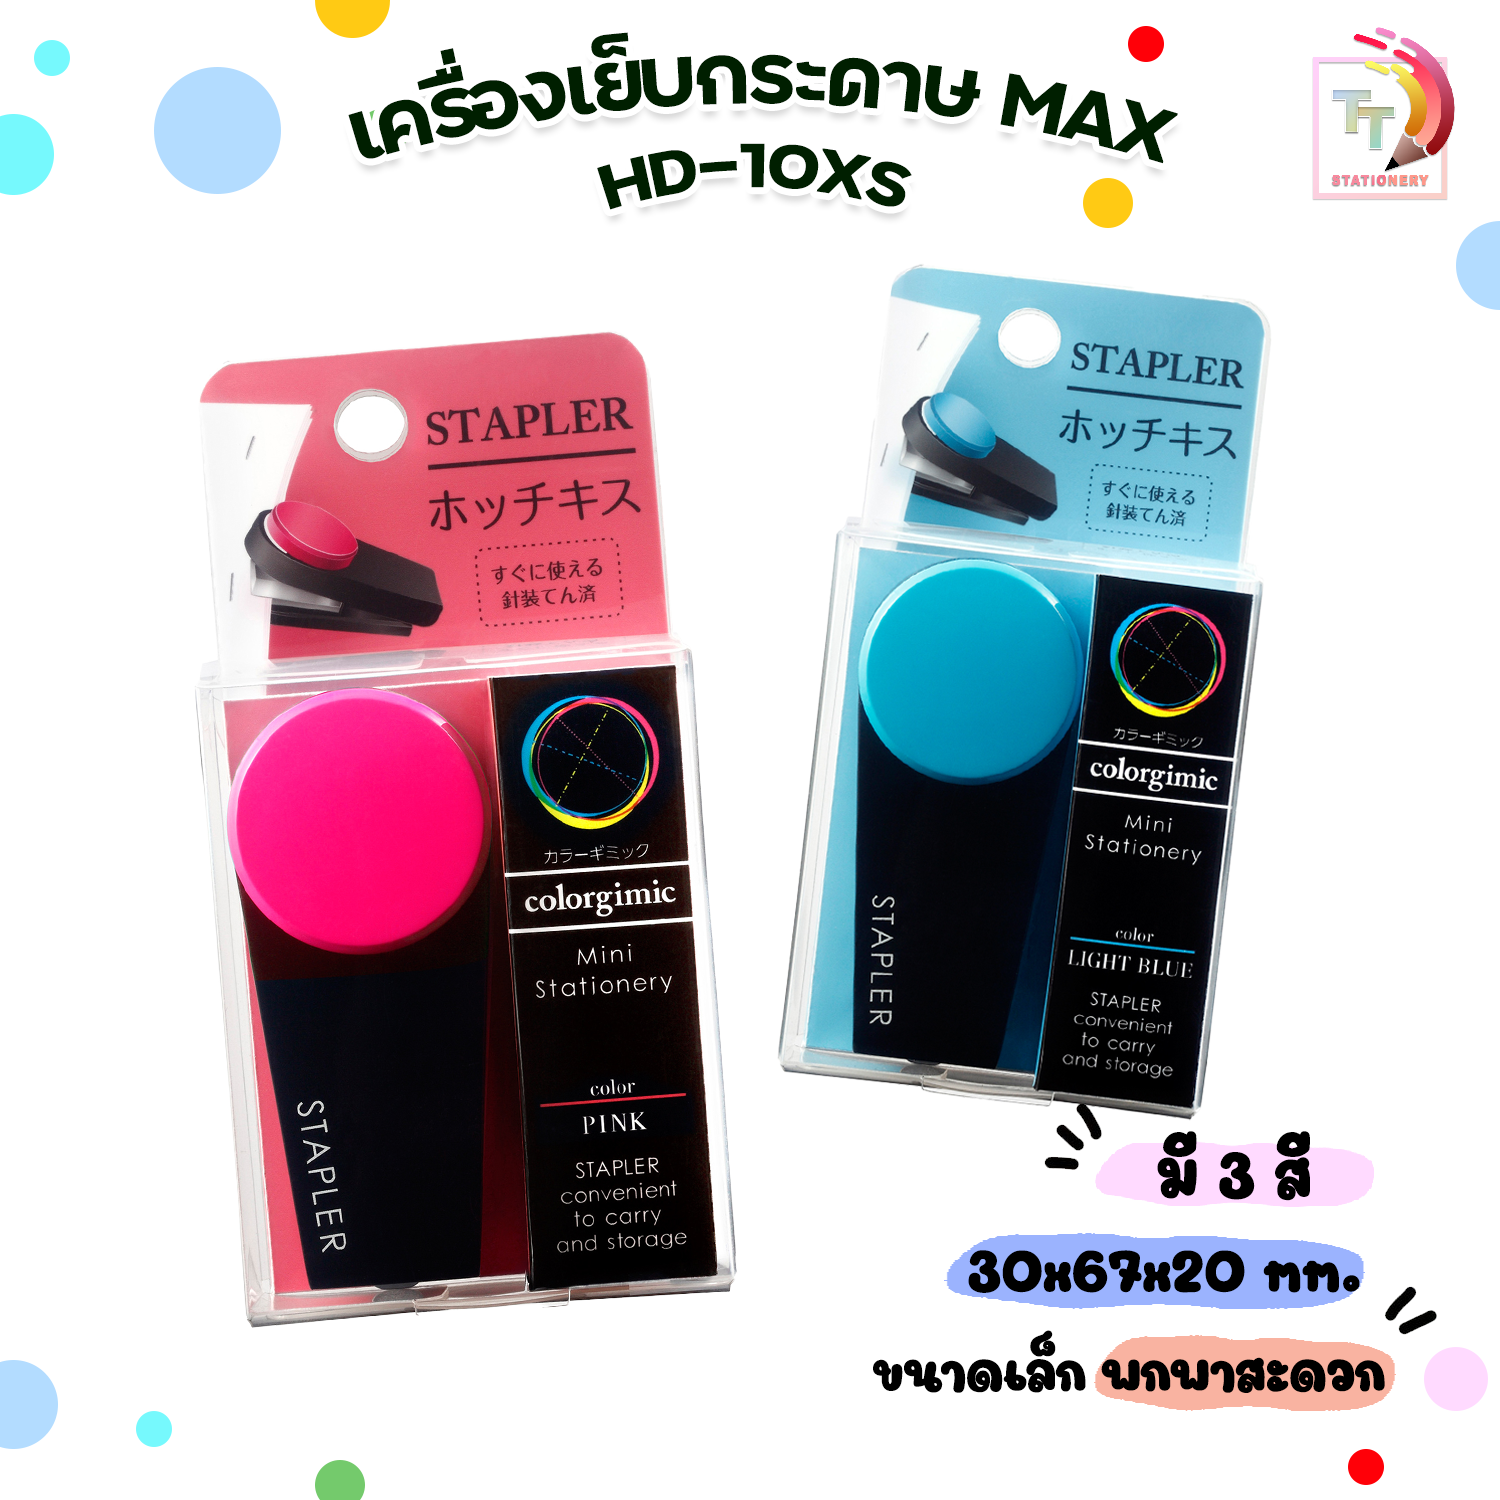 Max Colorgimic Mini Stapler HD-10XS - Pink